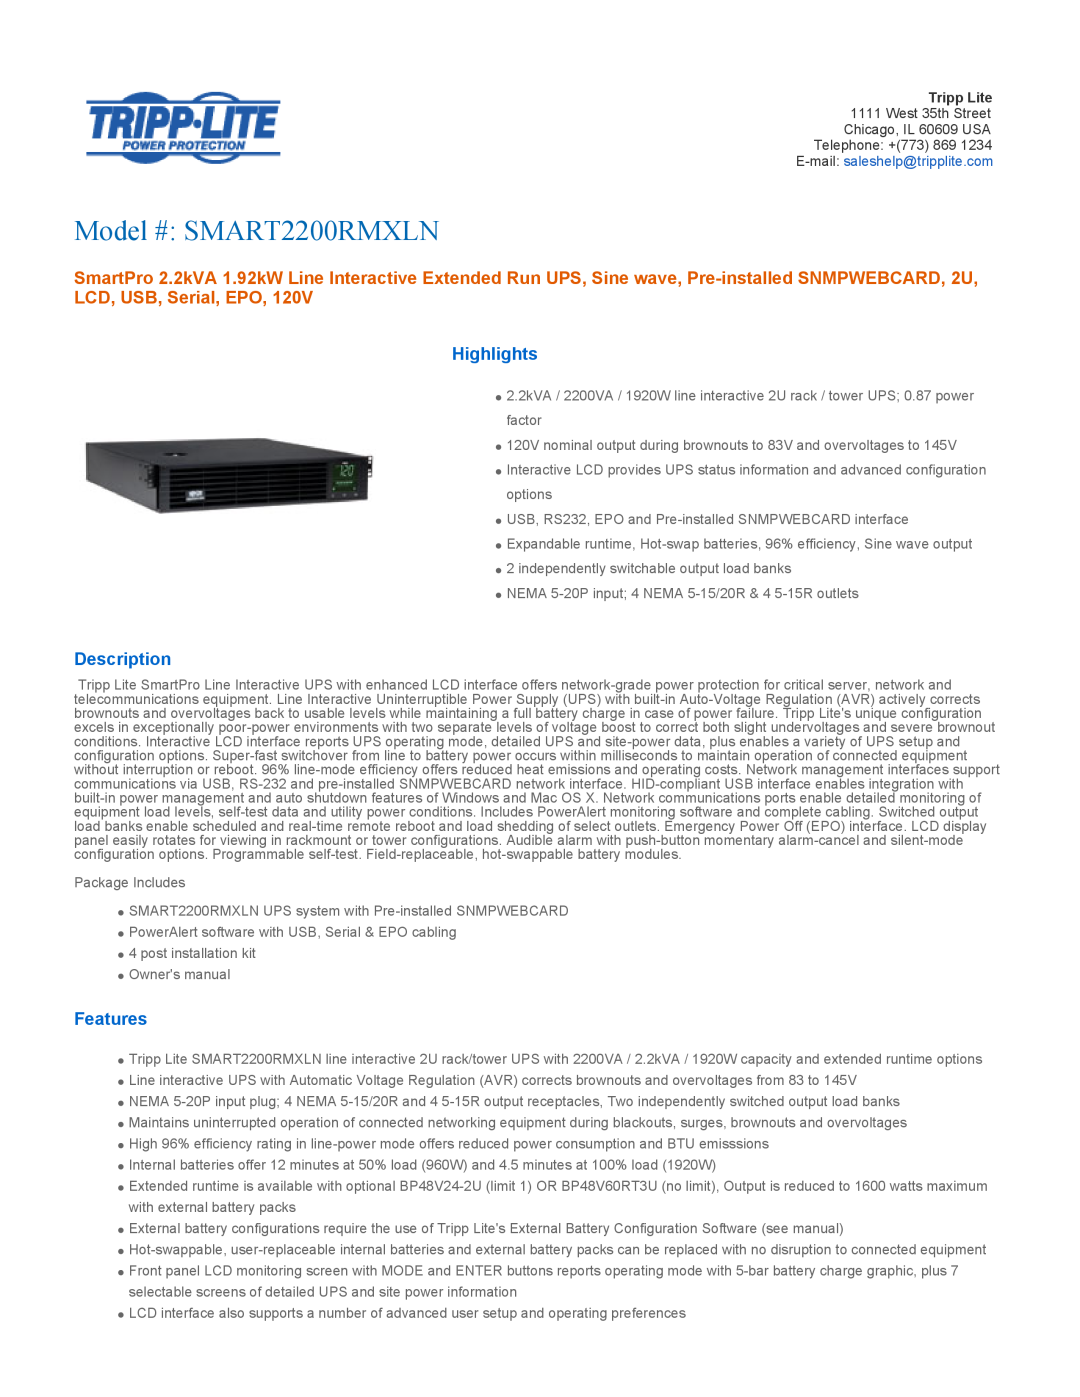 Tripp Lite owner manual Highlights, Description, Features, Model # SMART2200RMXLN 